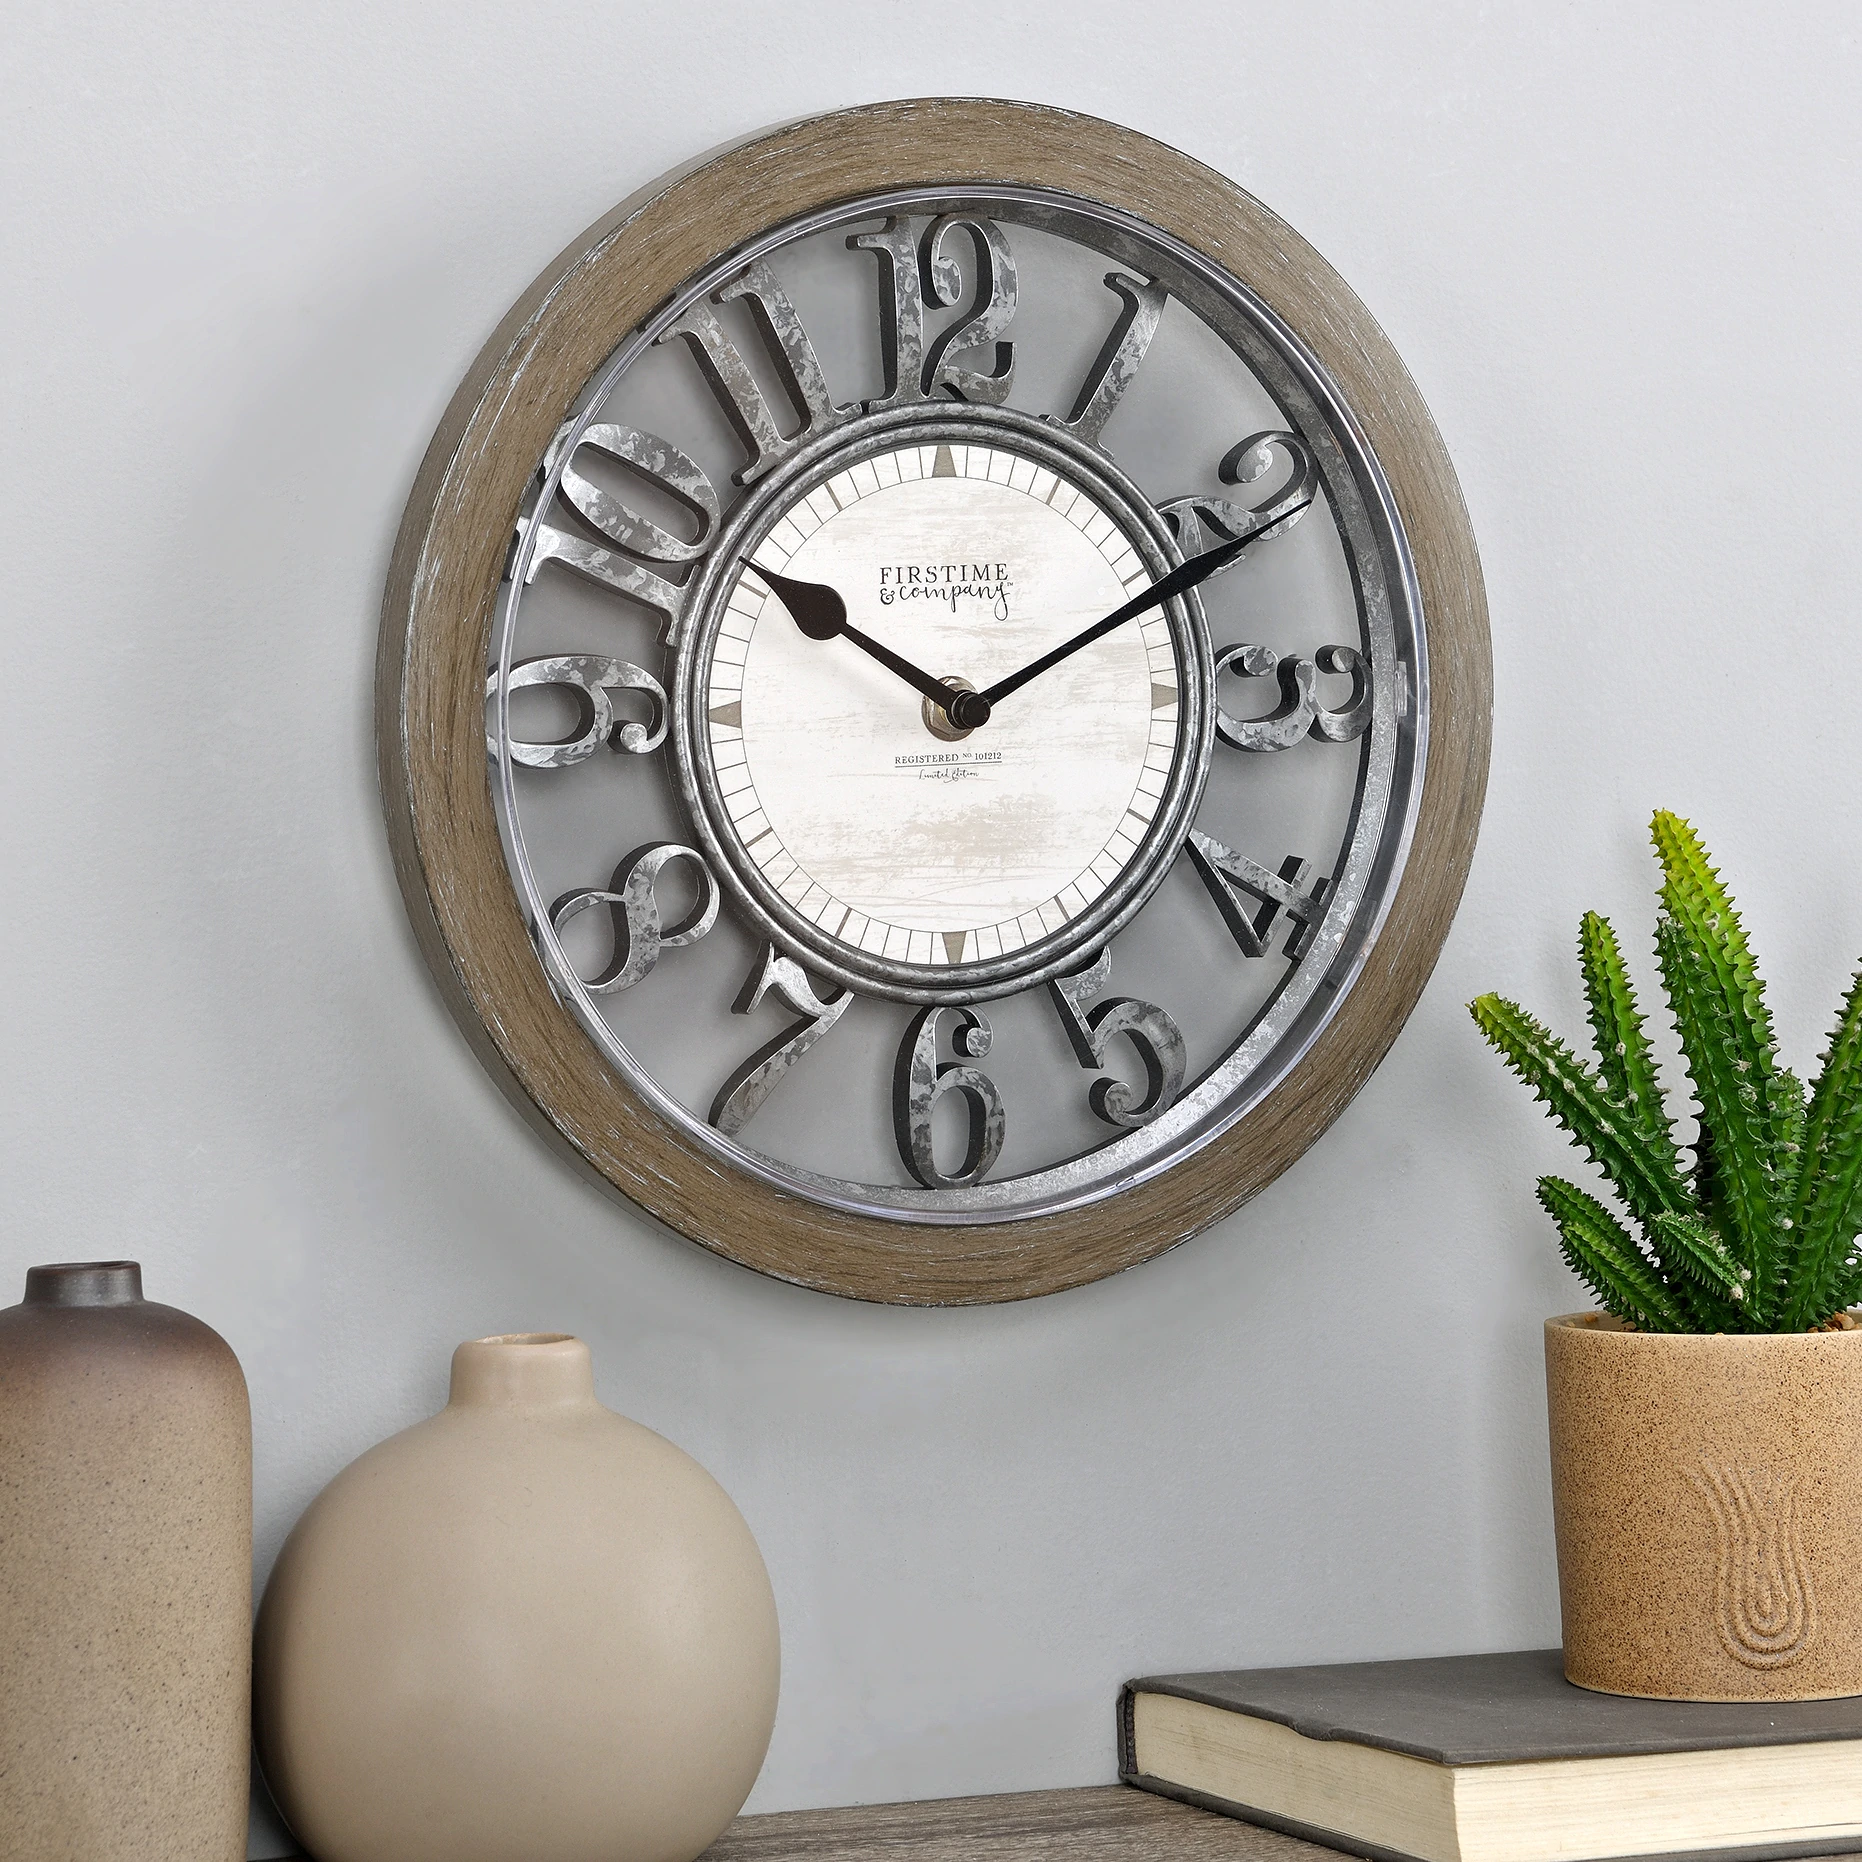 Hang Small Wall Clocks Close to Furniture or Shelves